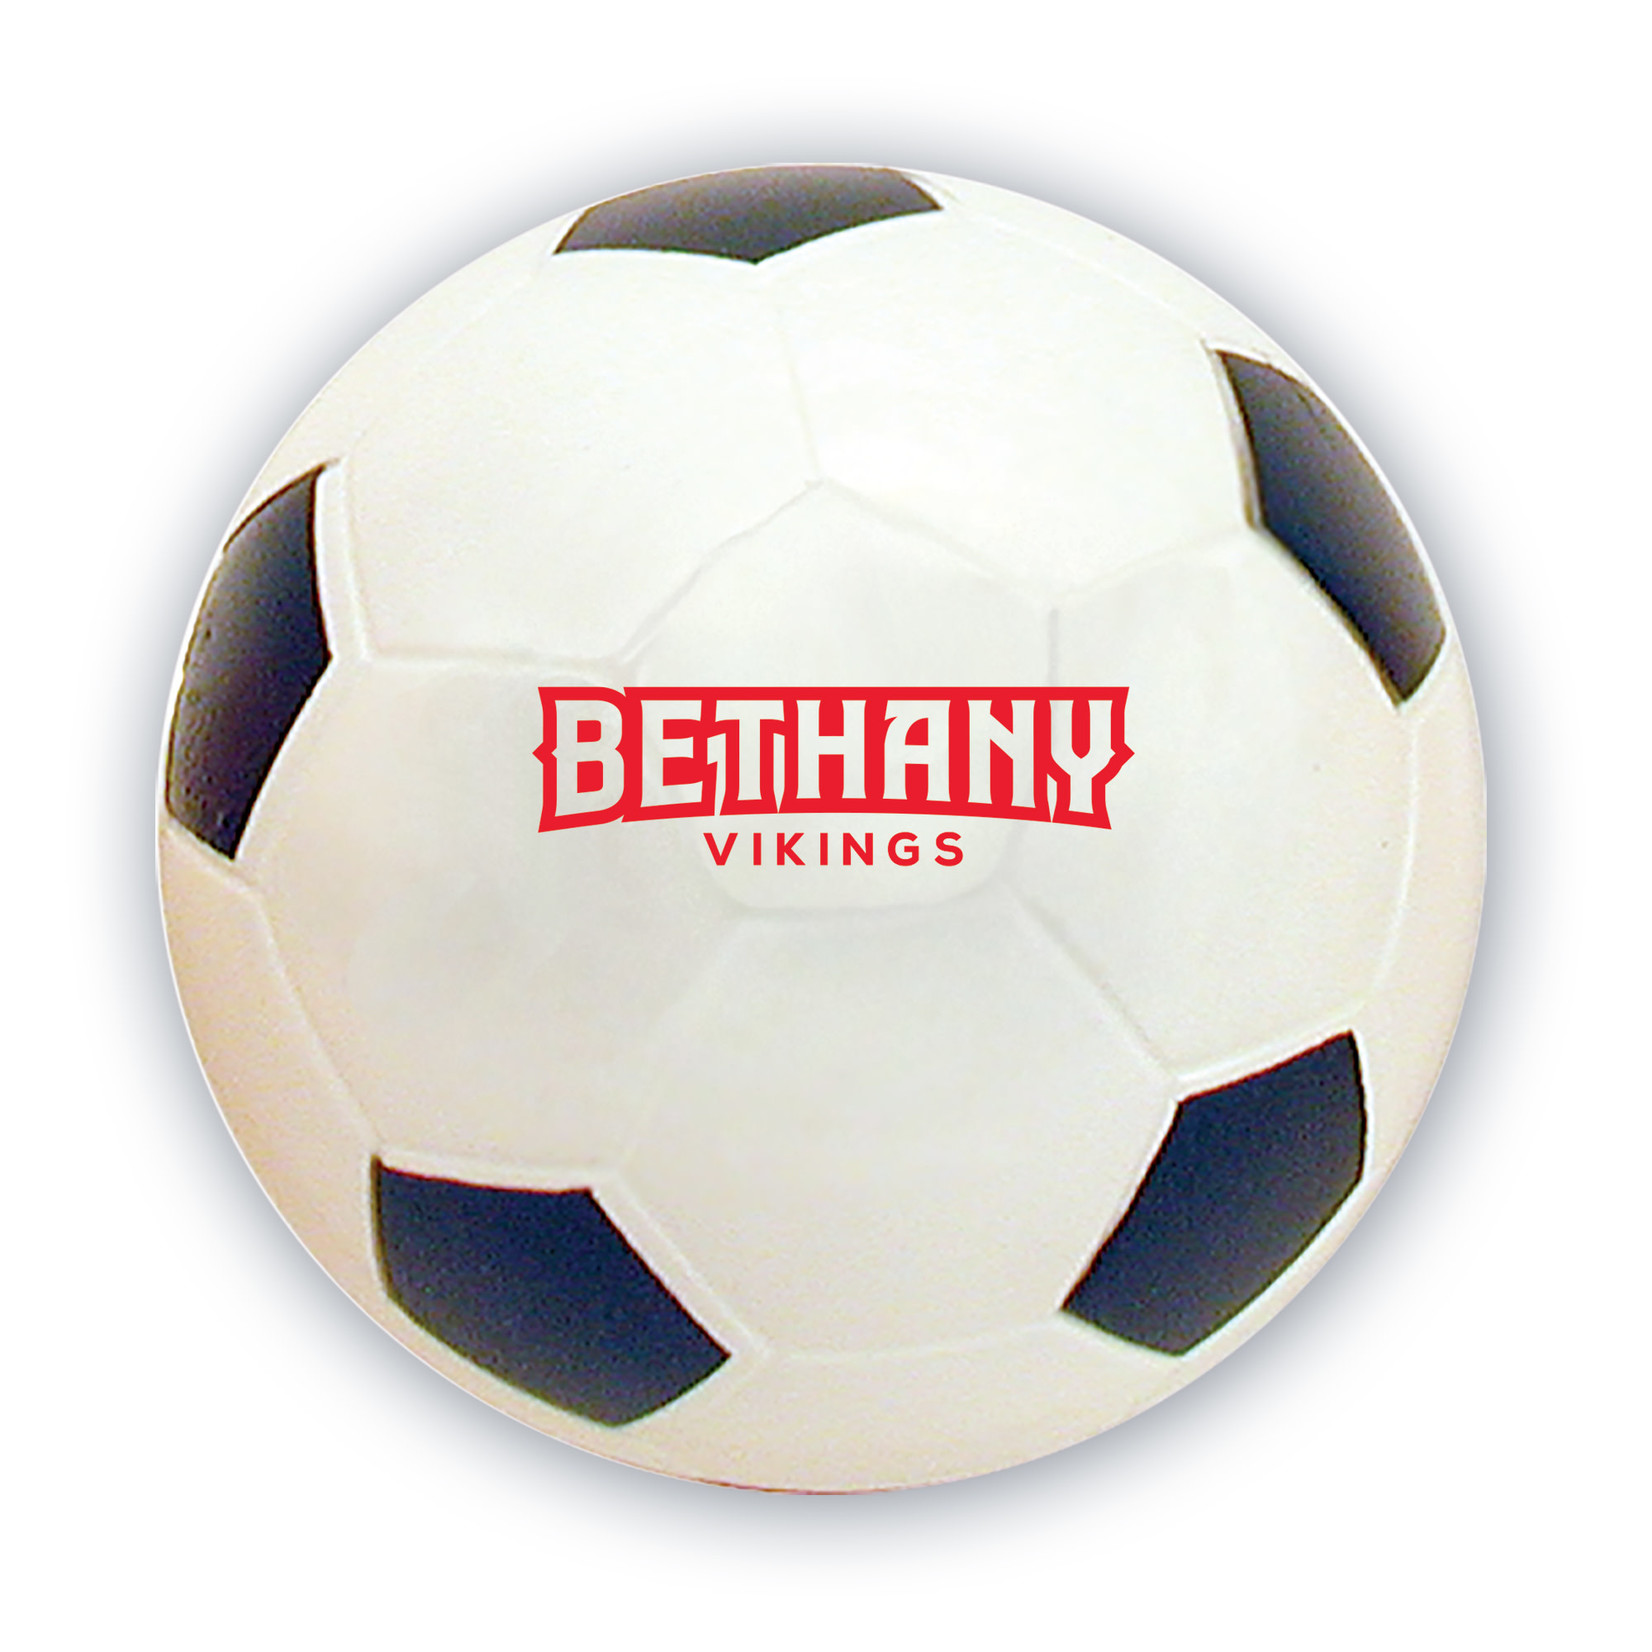 Bethany Vikings Foam Soccer Ball